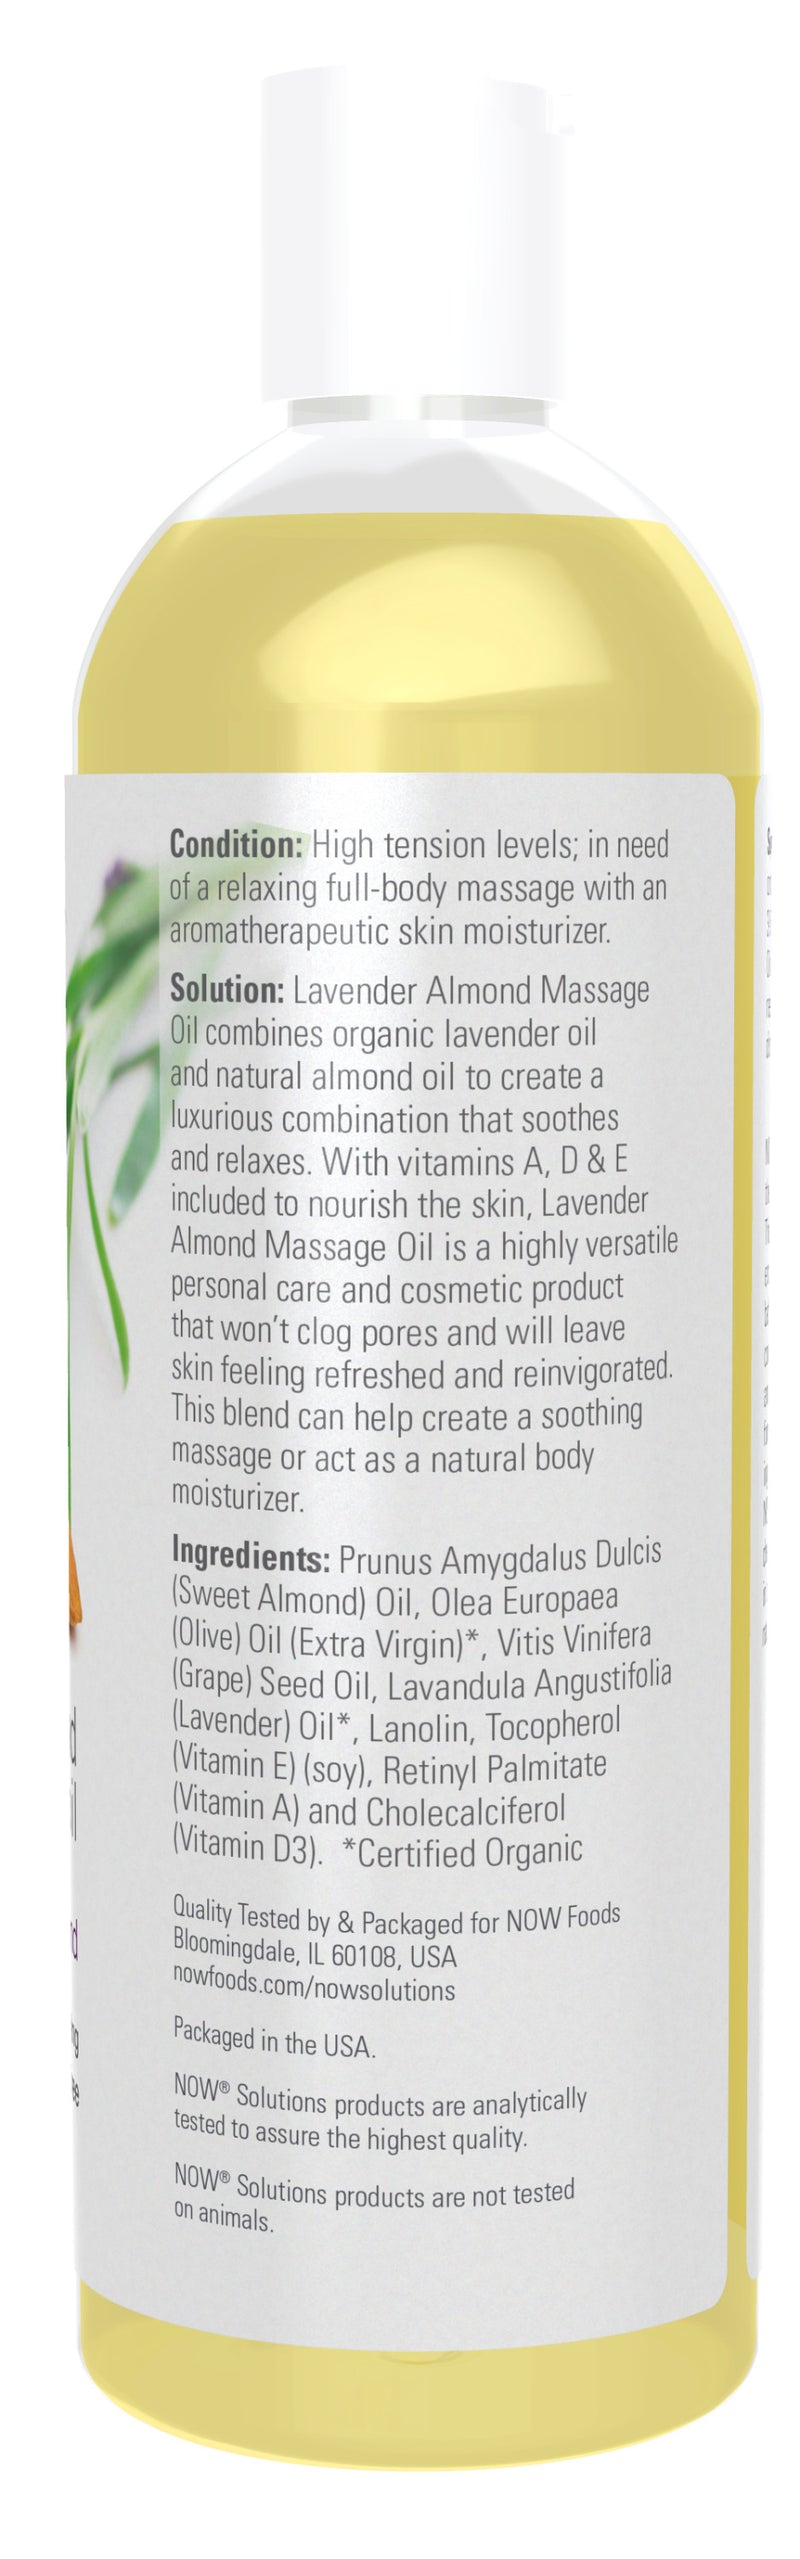 Now Solutions - Lavender Almond Massage Oil 16 fl oz (473 ml)